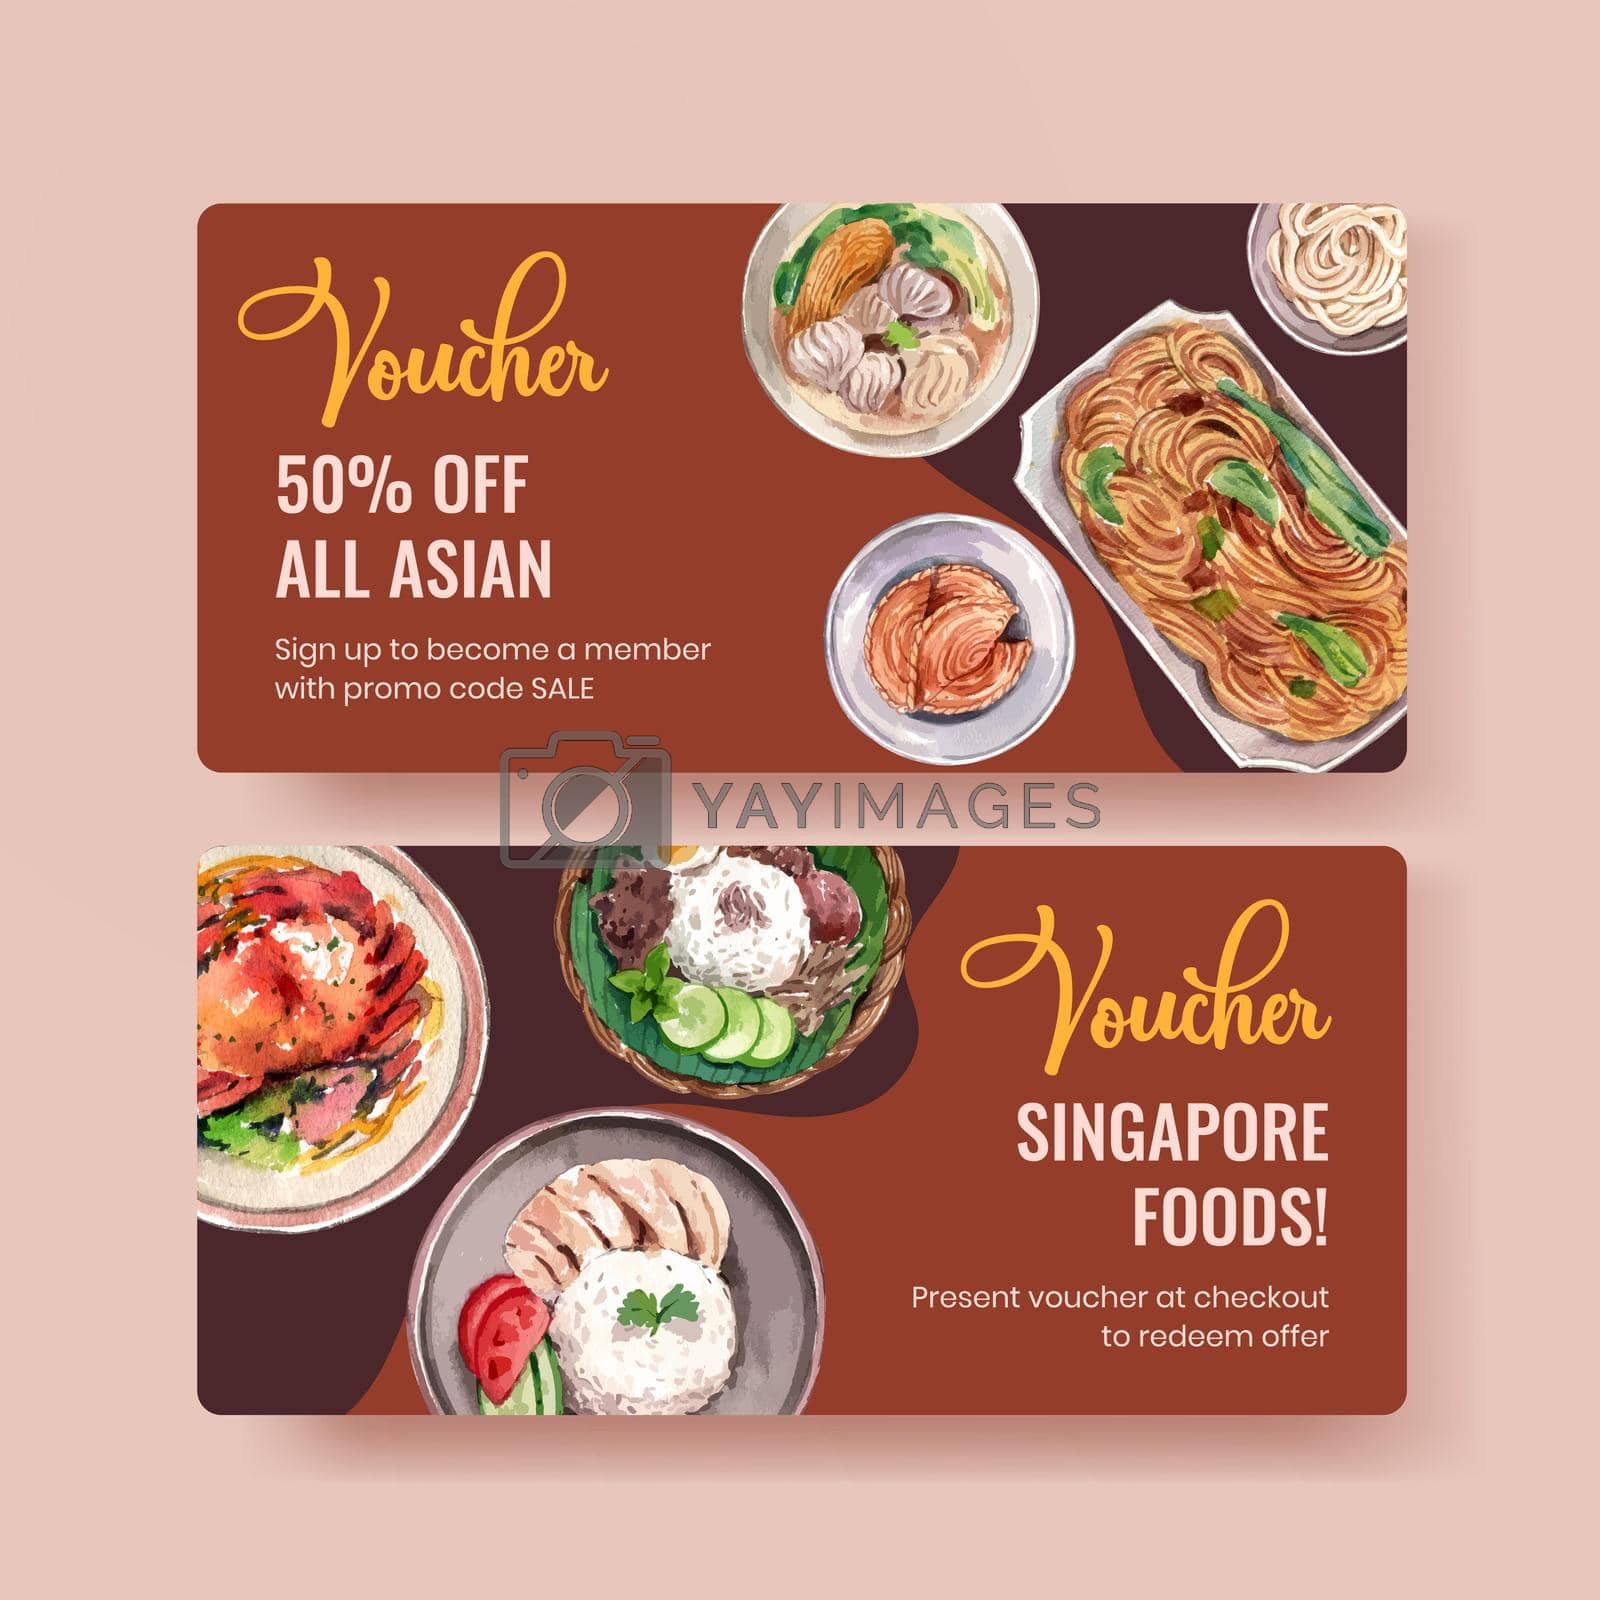 Voucher template with Singapore cuisine concept,watercolor style
